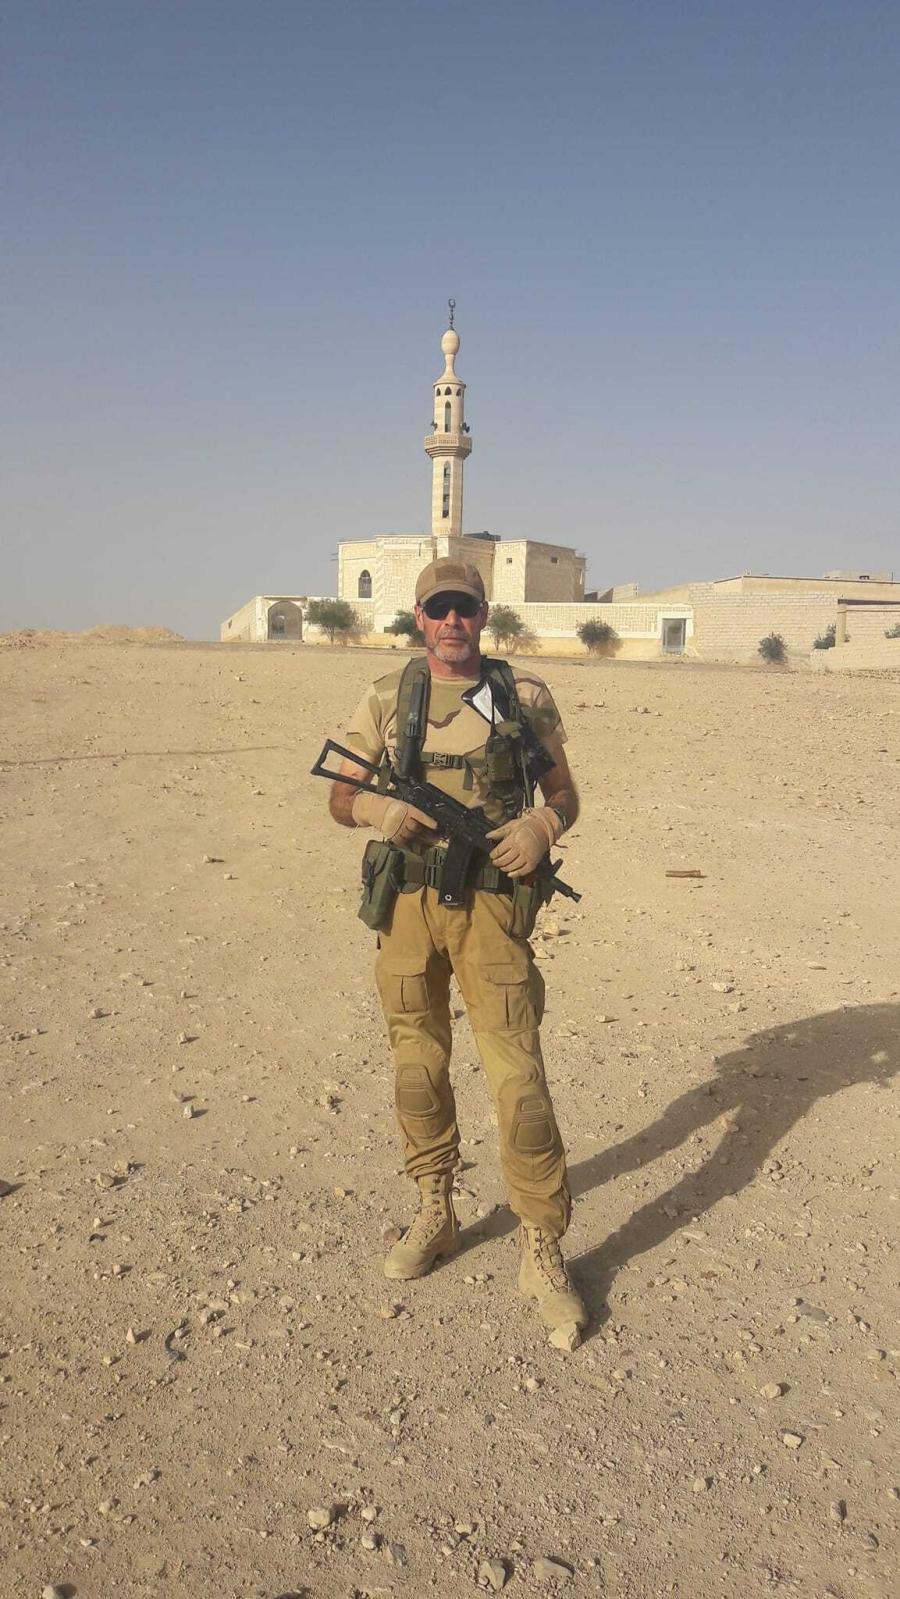 a man standing in the desert holding a gun in a military uniform